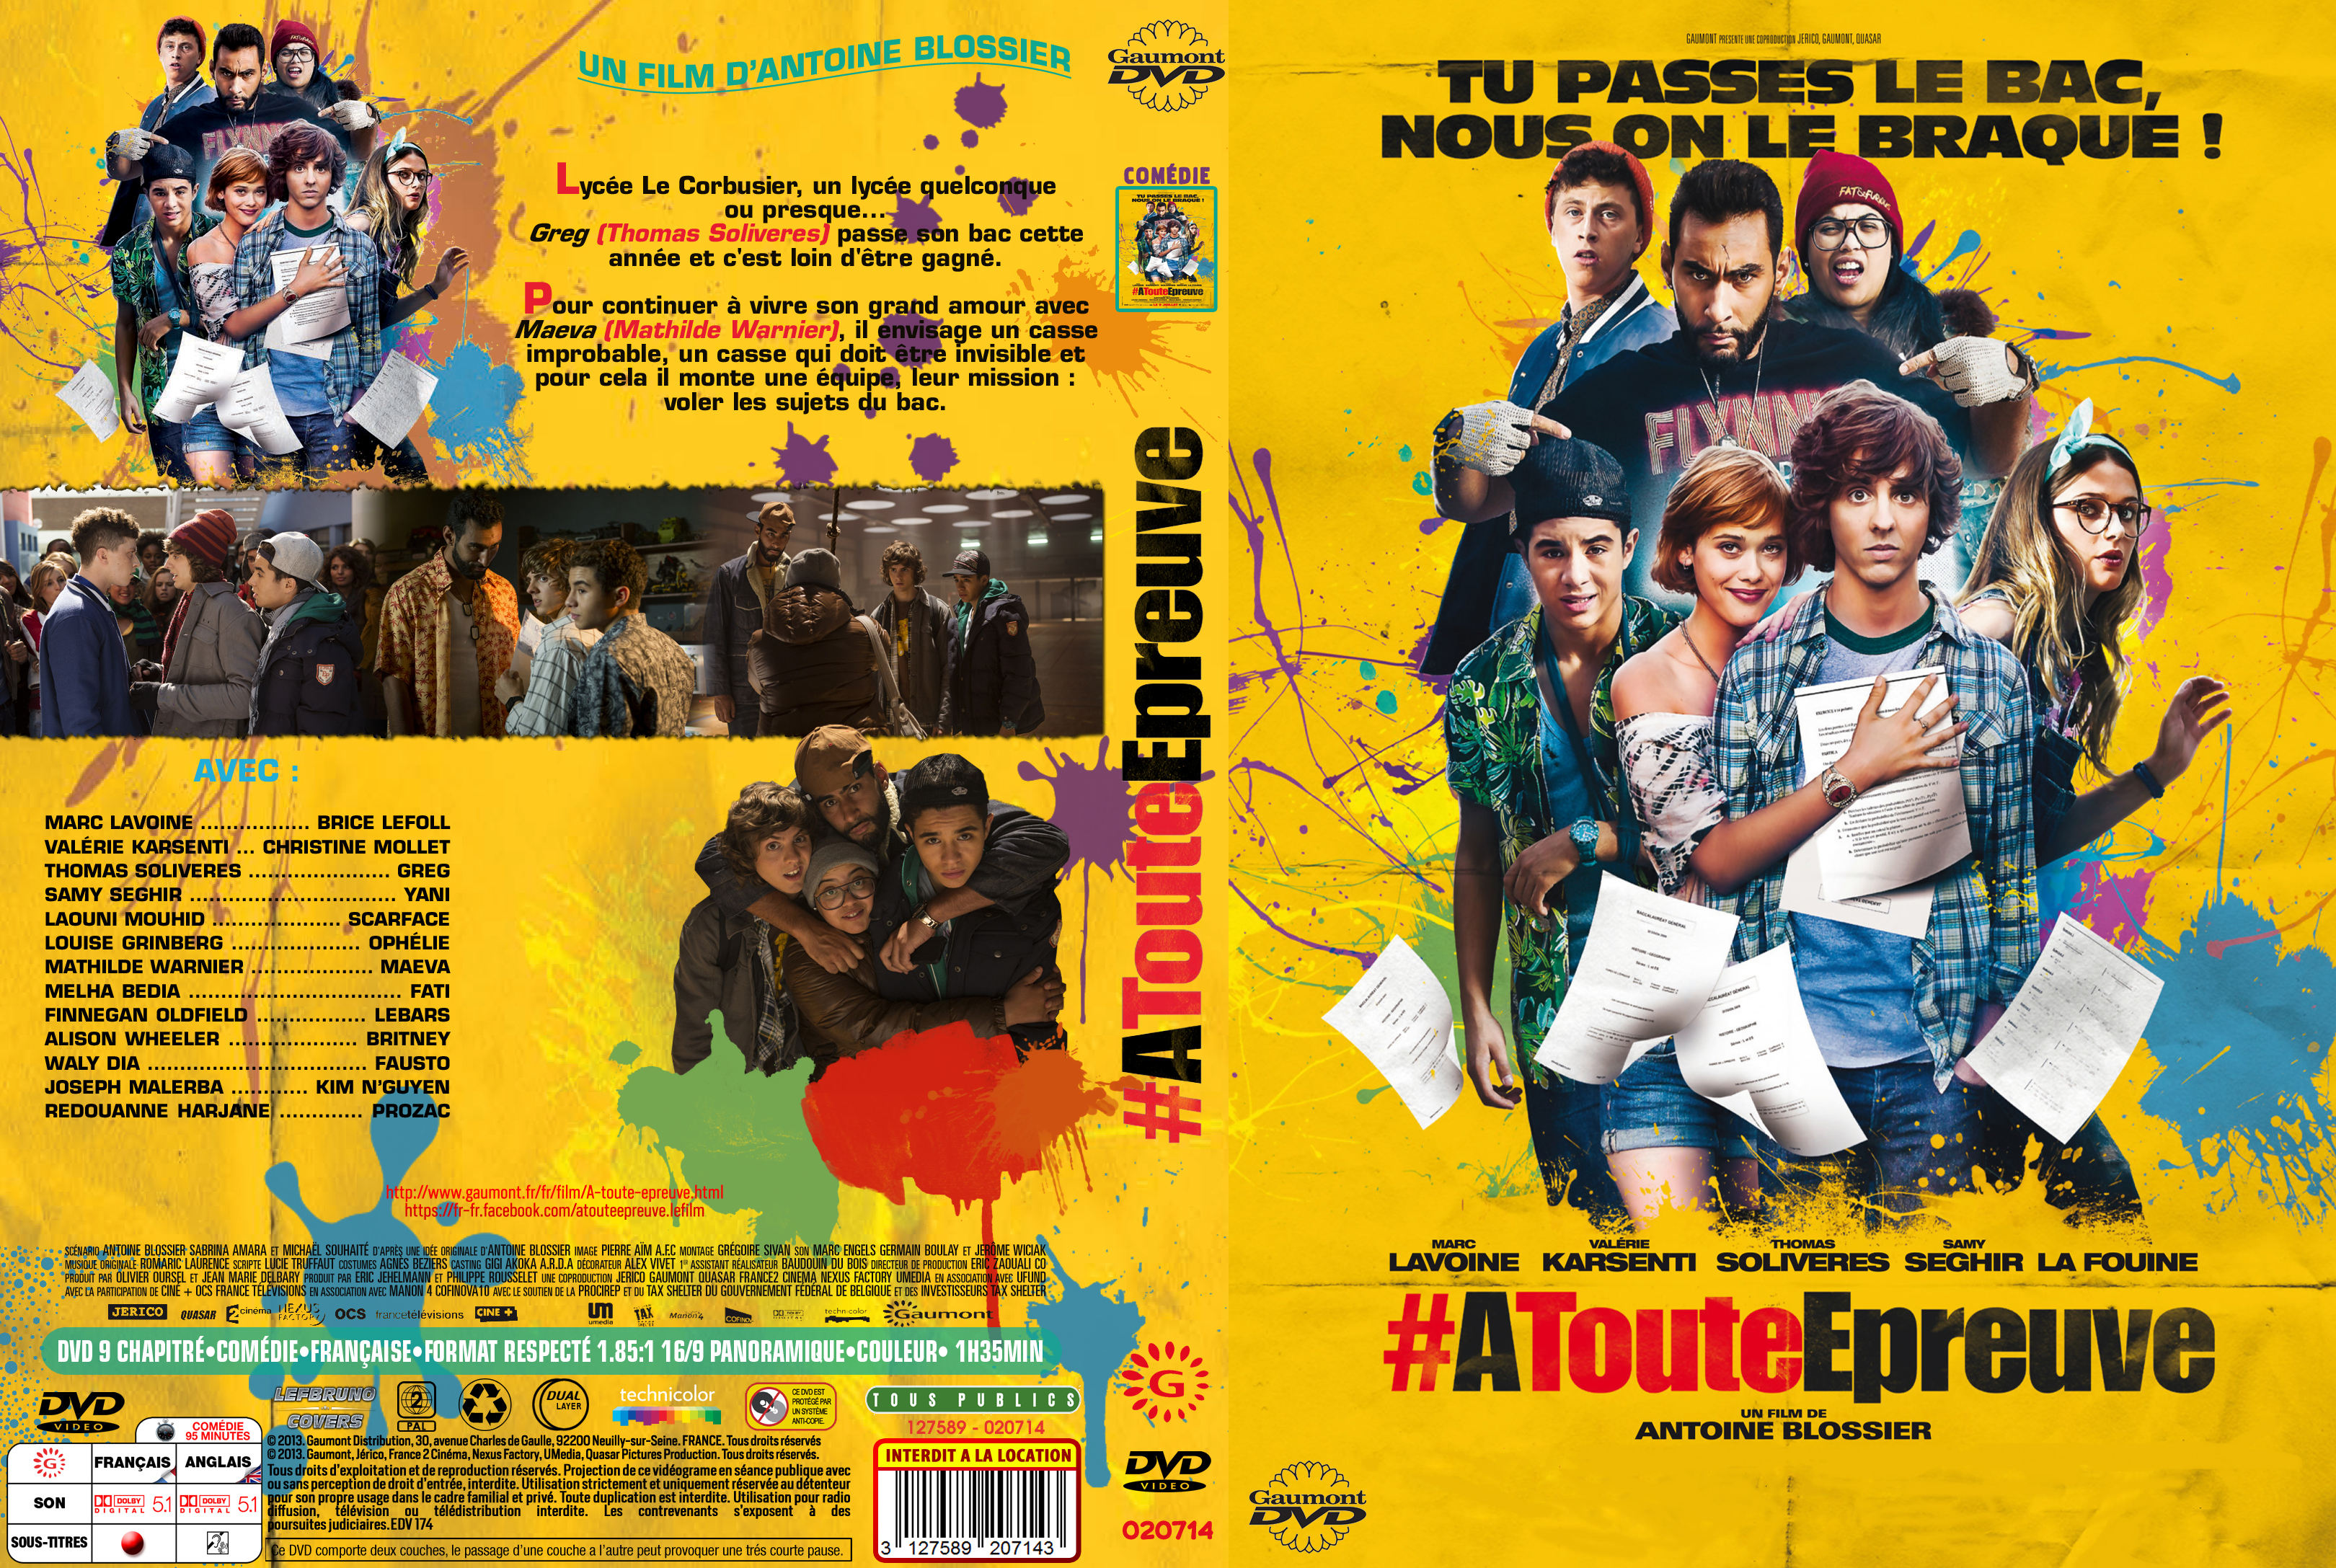 Jaquette DVD A toute preuve (2014) custom